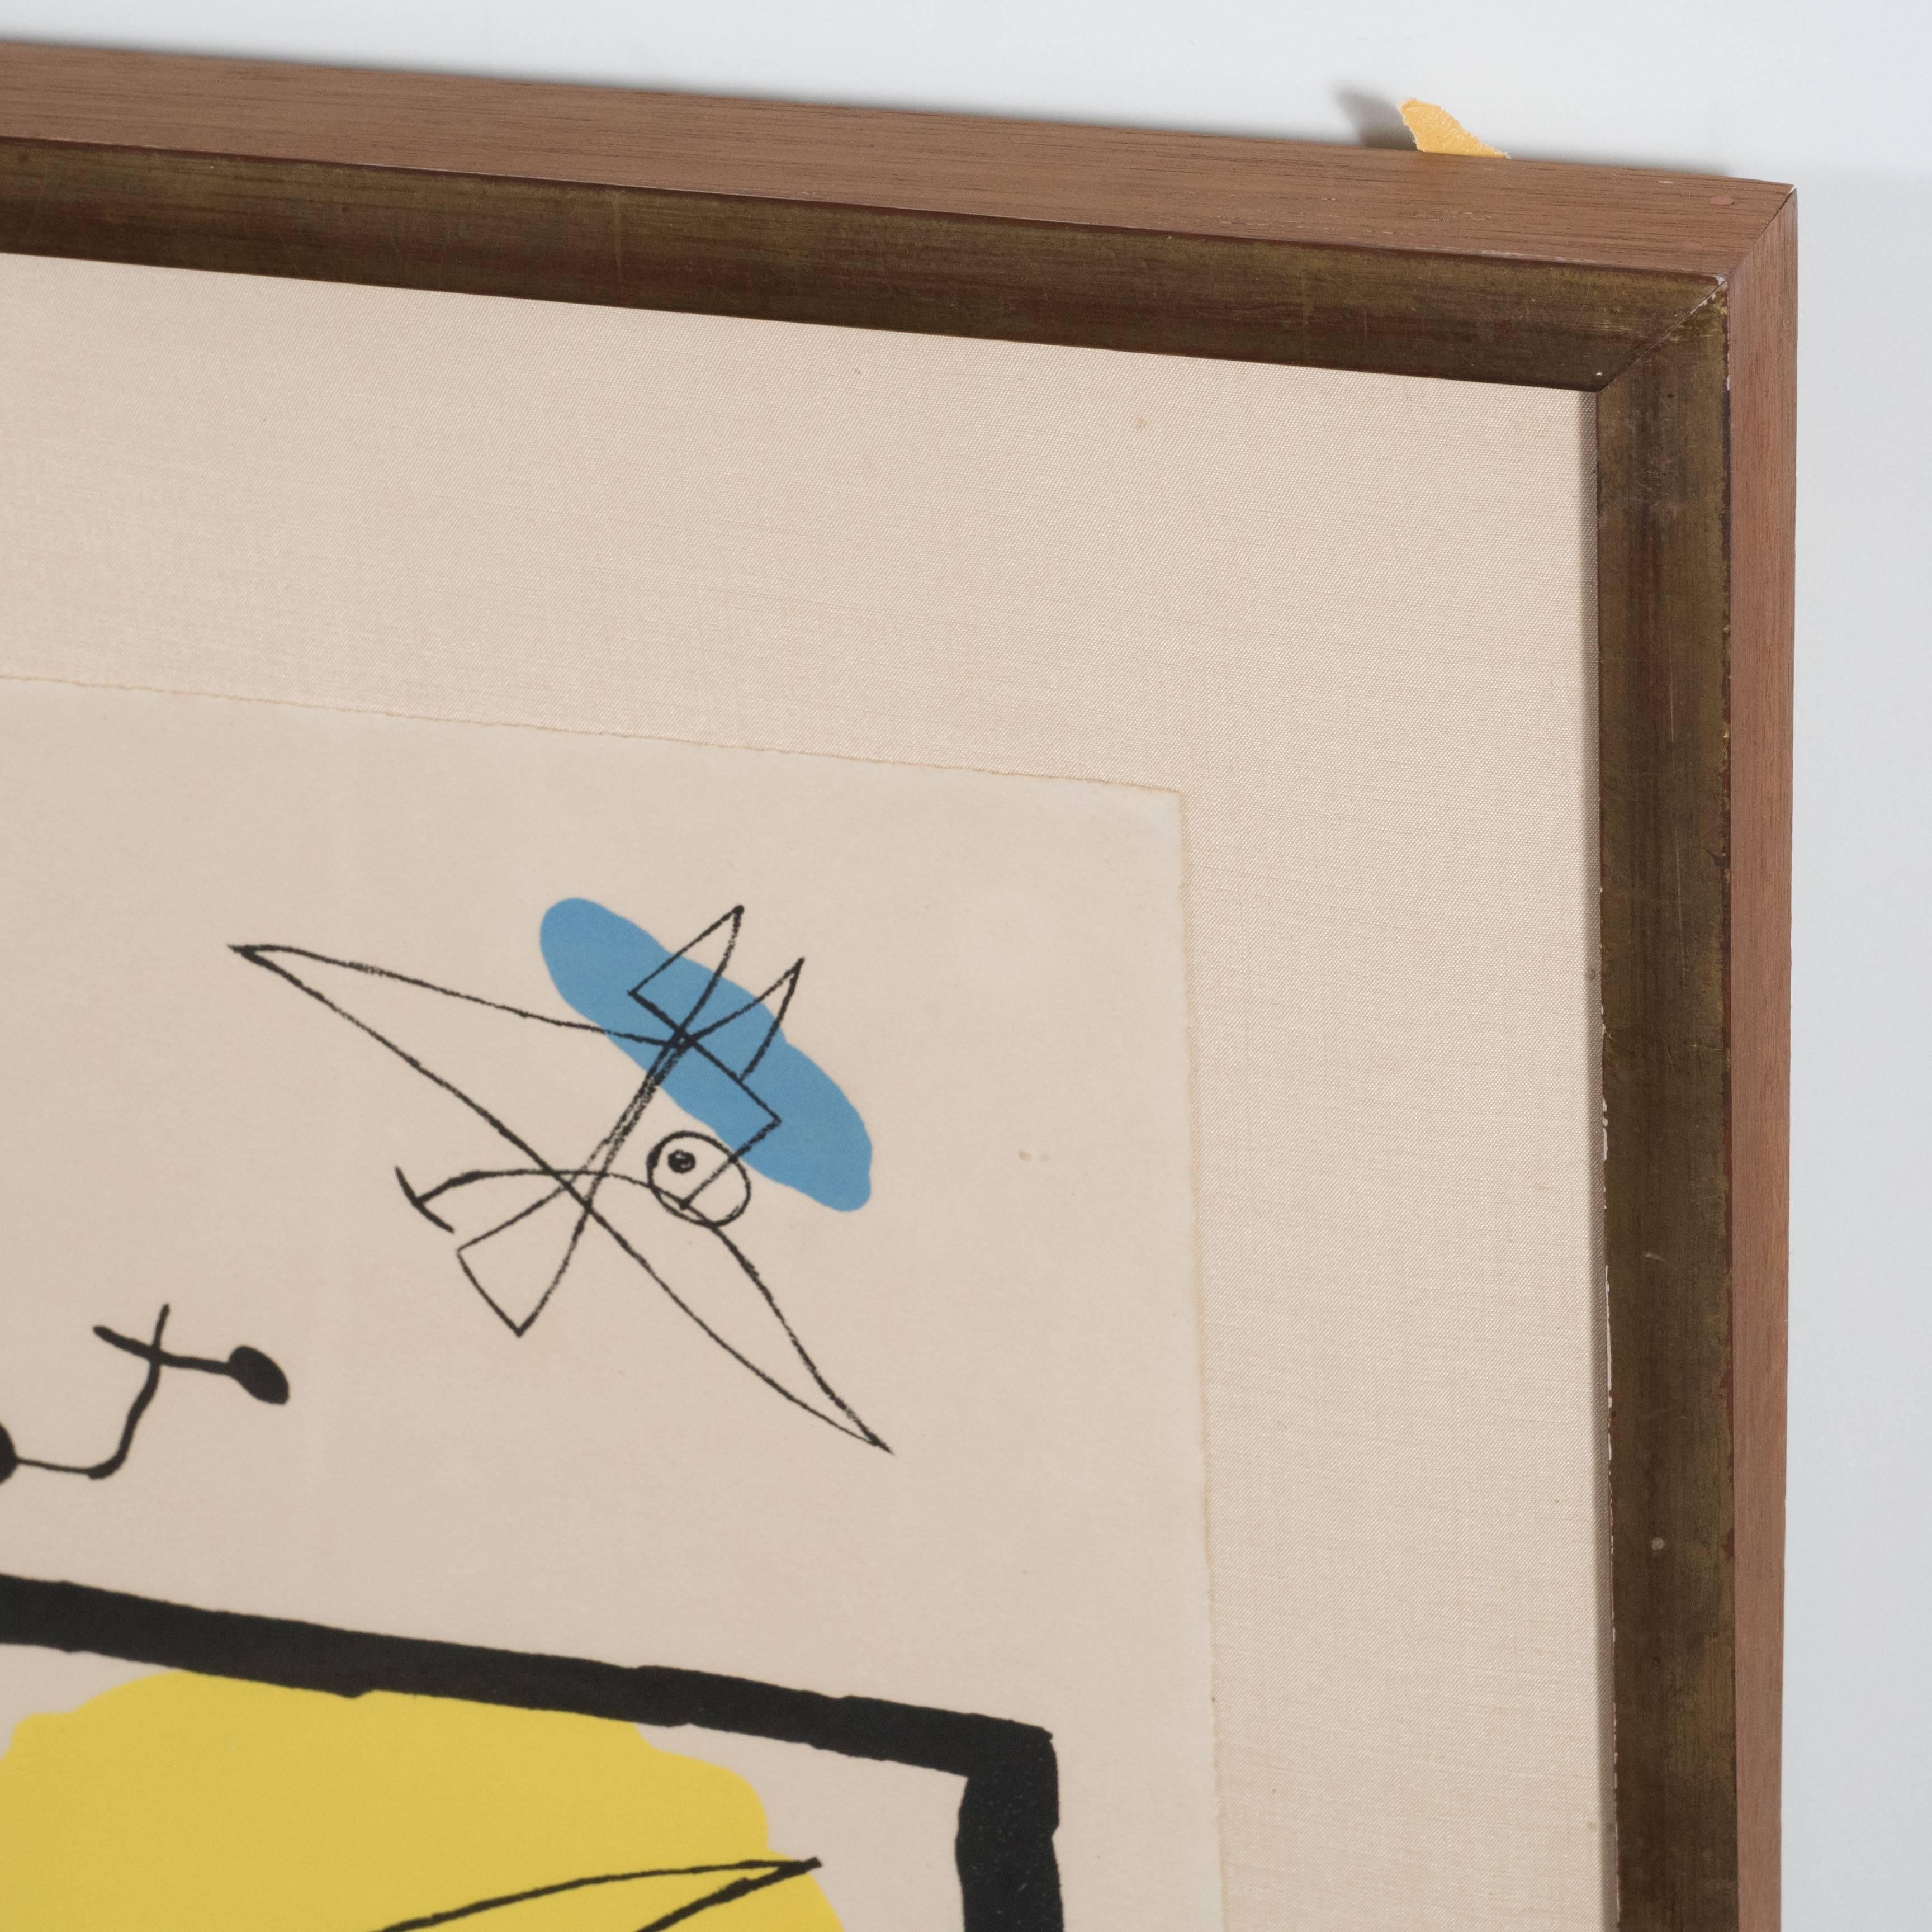 Joan Miro,
